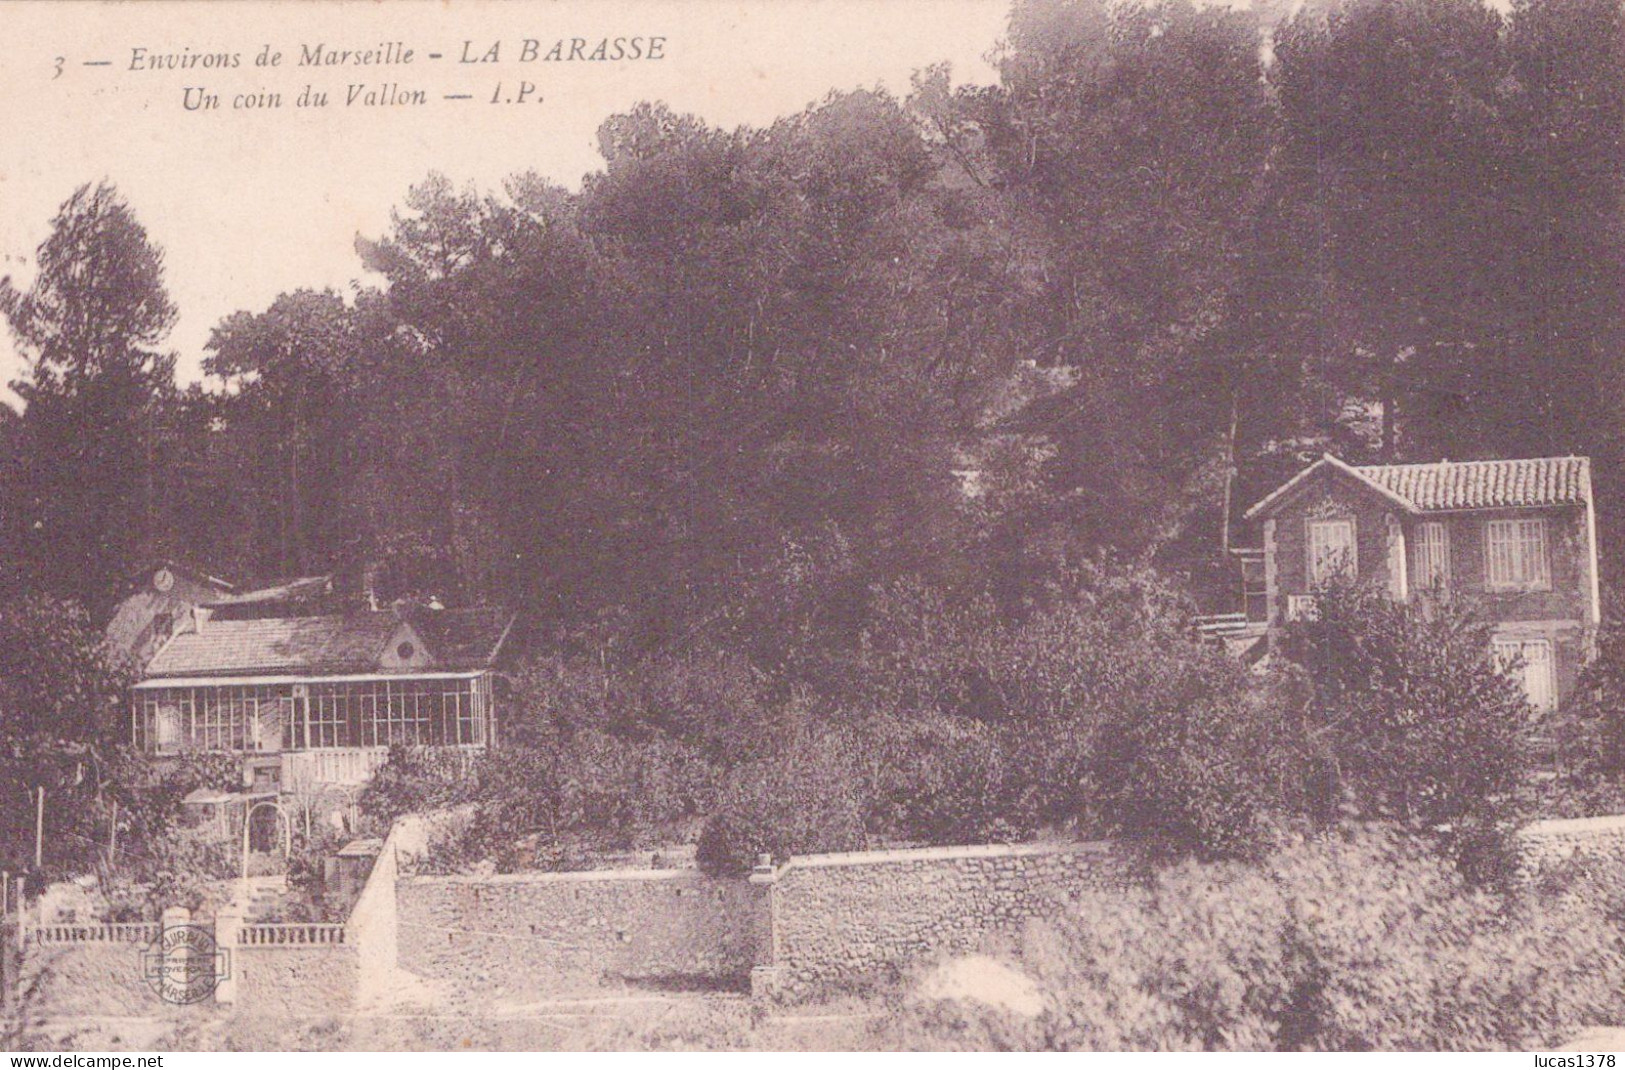 13 / MARSEILLE / LA BARASSE / UN COIN DU VALLON  / IP 3 - Saint Marcel, La Barasse, Saintt Menet